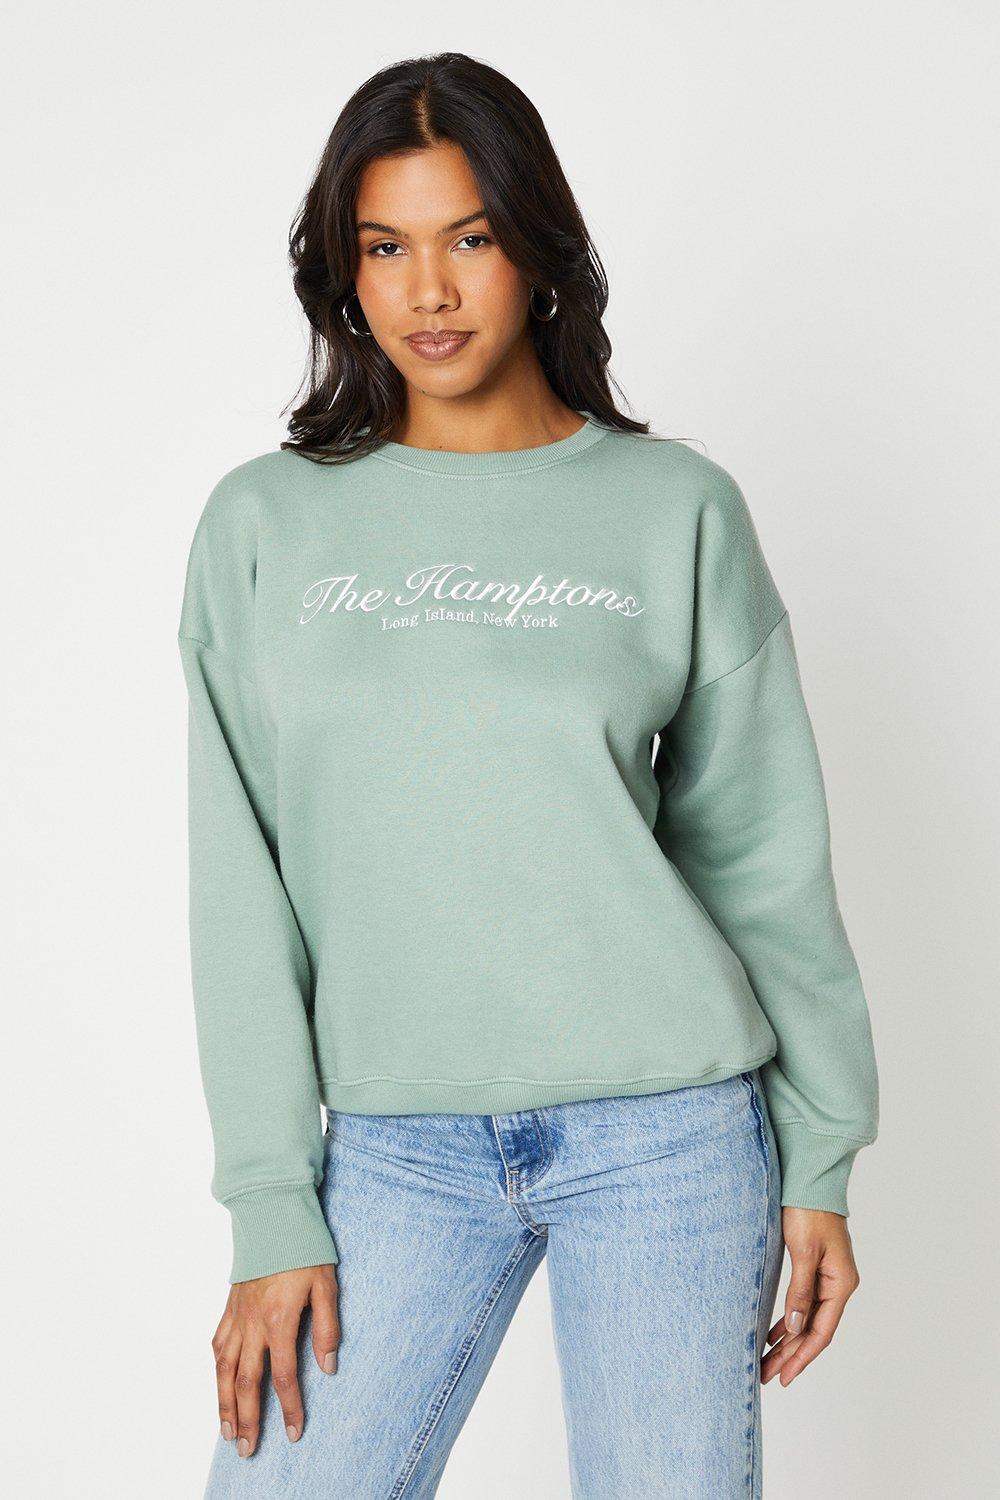 Women’s Embroidered Sweatshirt - green - S